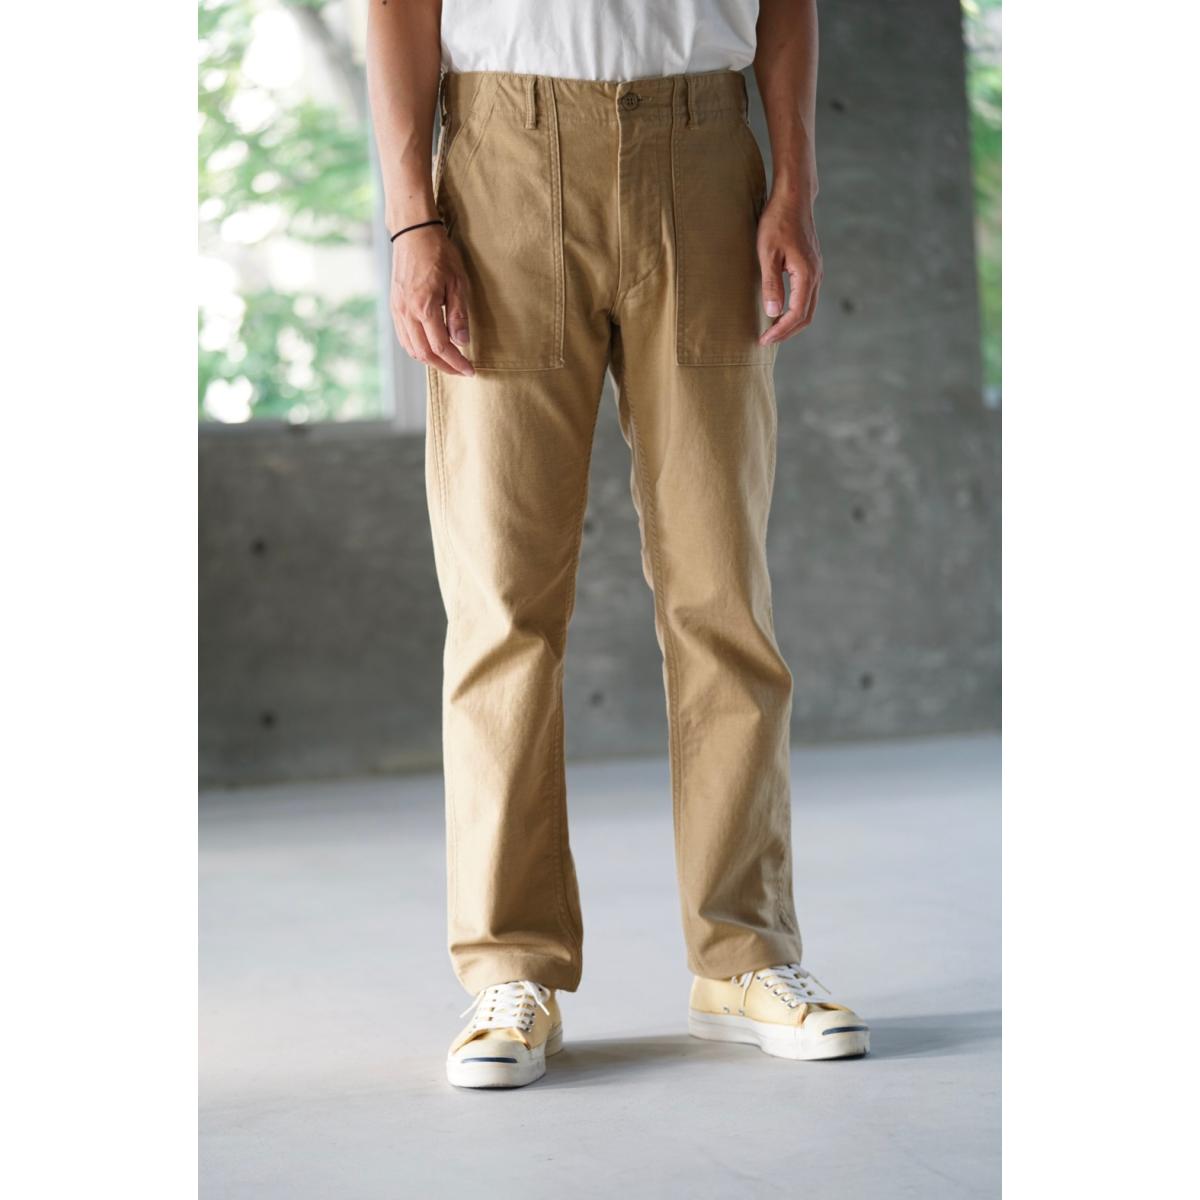 Slim Fit Fatigue Pants Khaki - Fatigue Pants